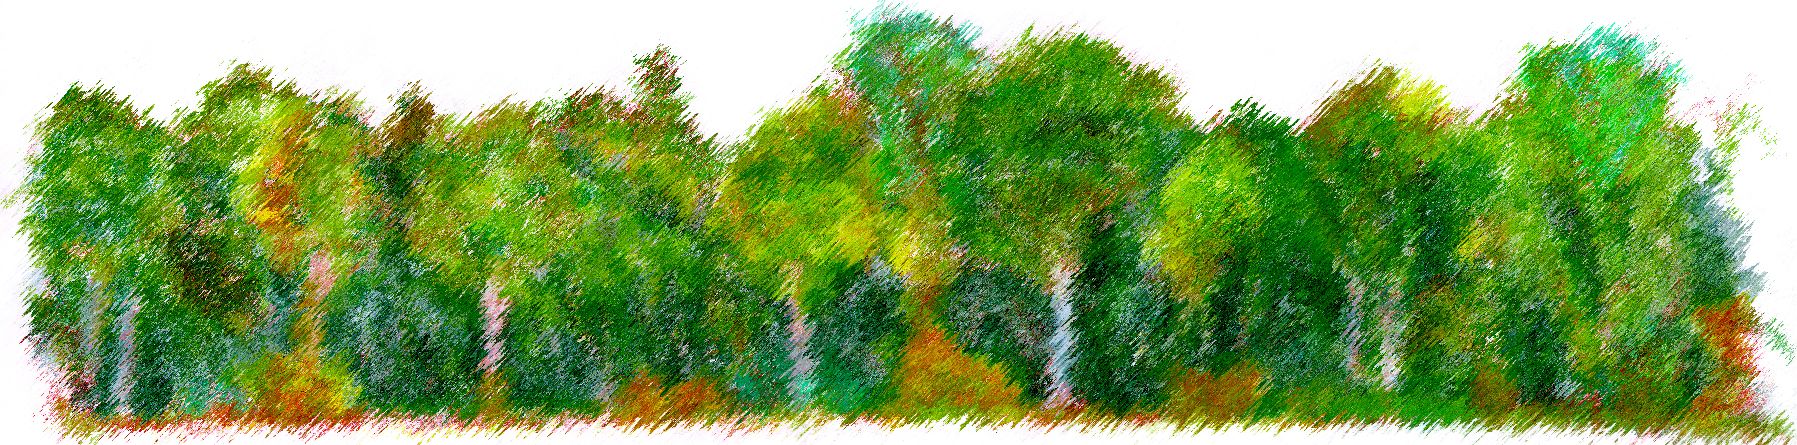 Past p 01 - arbres 20.jpg